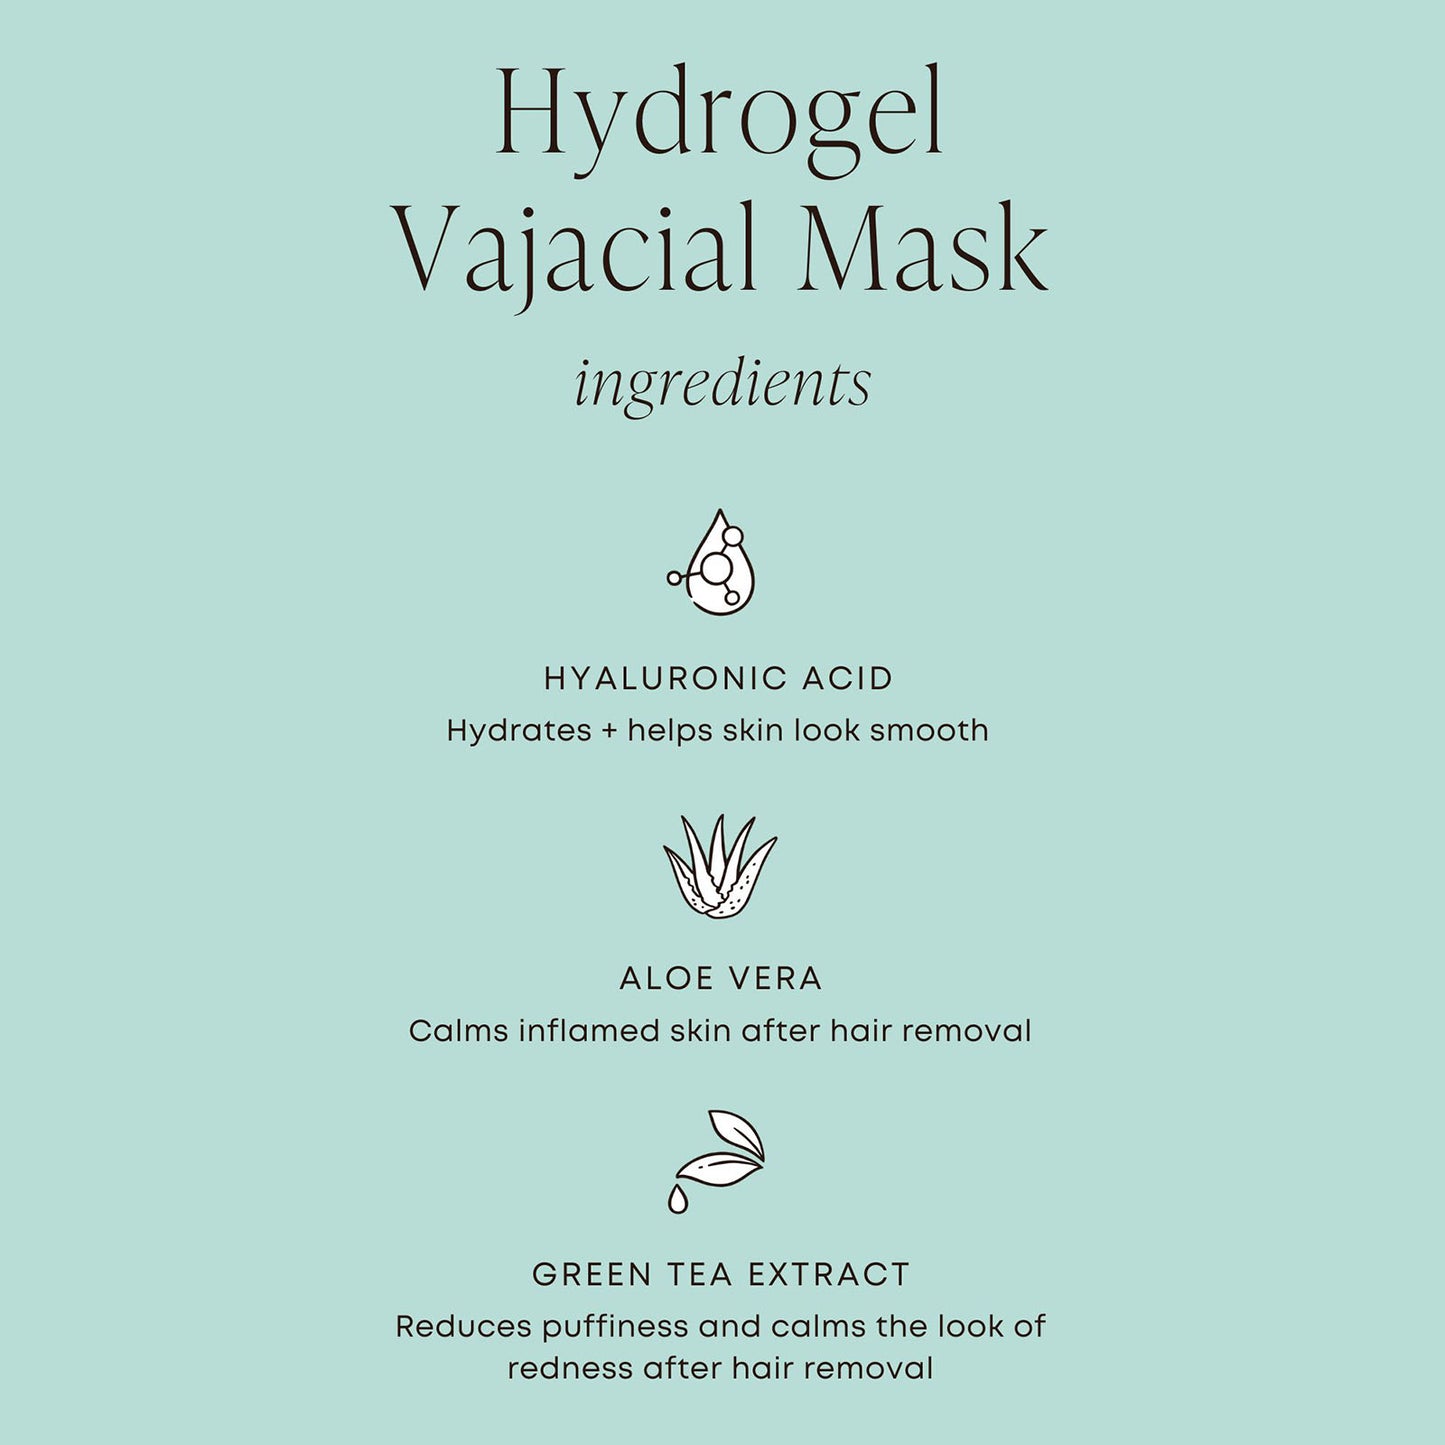 BushBalm: Hydrogel Vajacial Triangle Mask